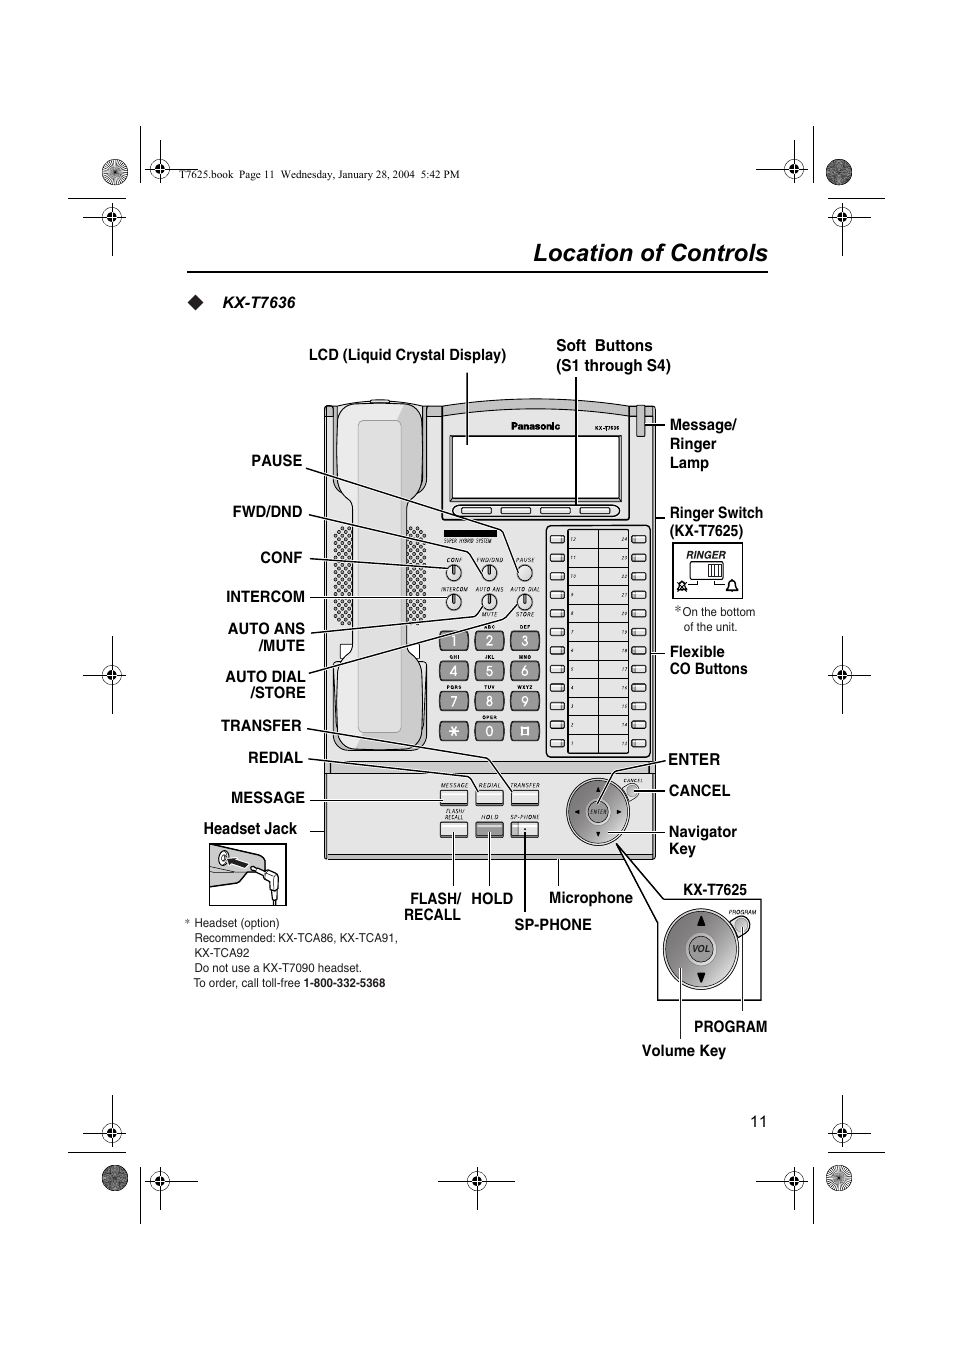 Location of controls | Panasonic KX-T7630 User Manual | Page 11 / 16